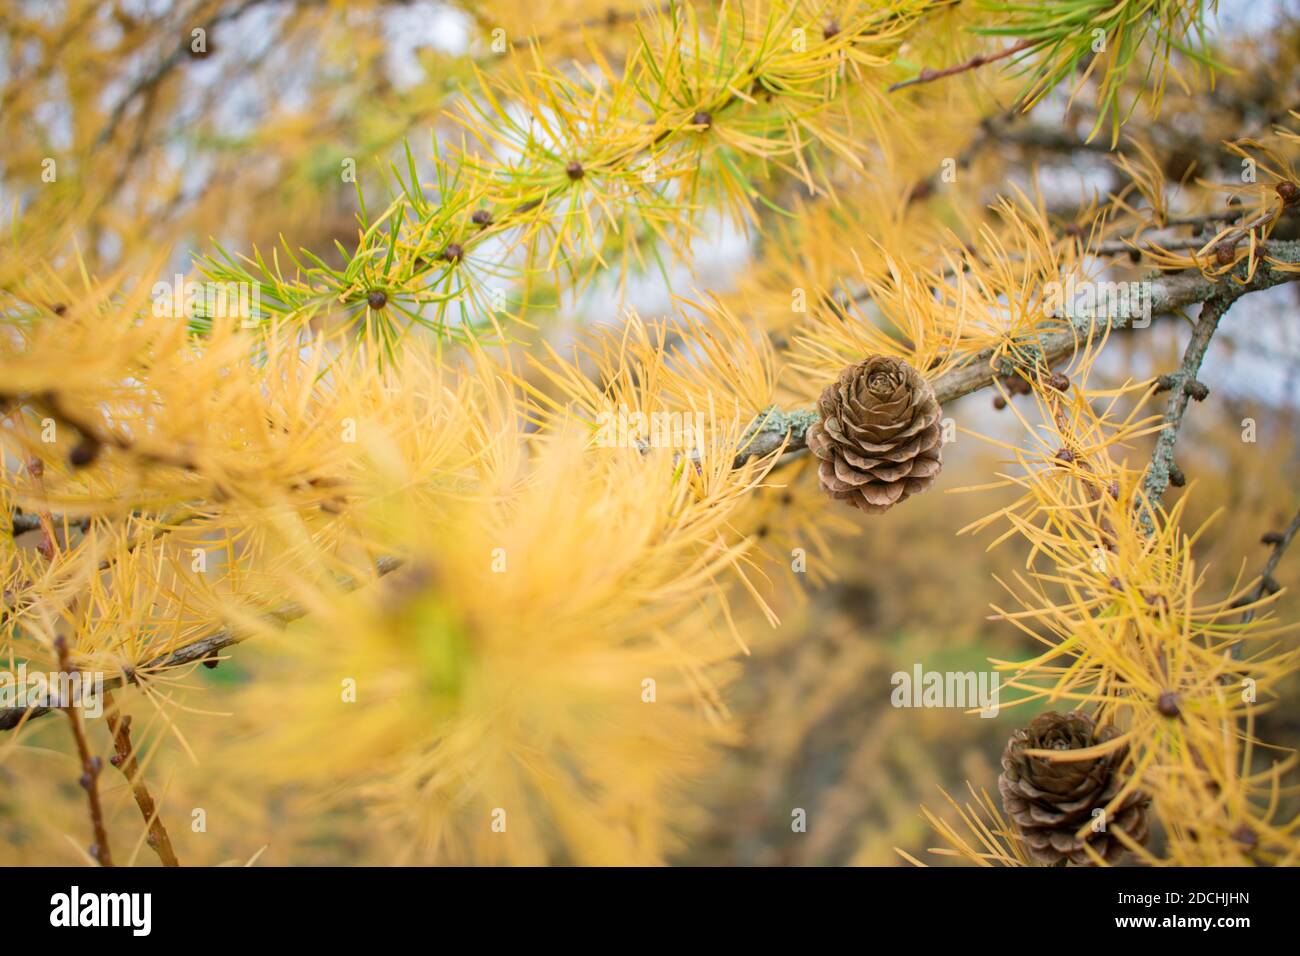 European Larch tree (Larix decidua) cones on a branch with yellow needles at autumn Stock Photo